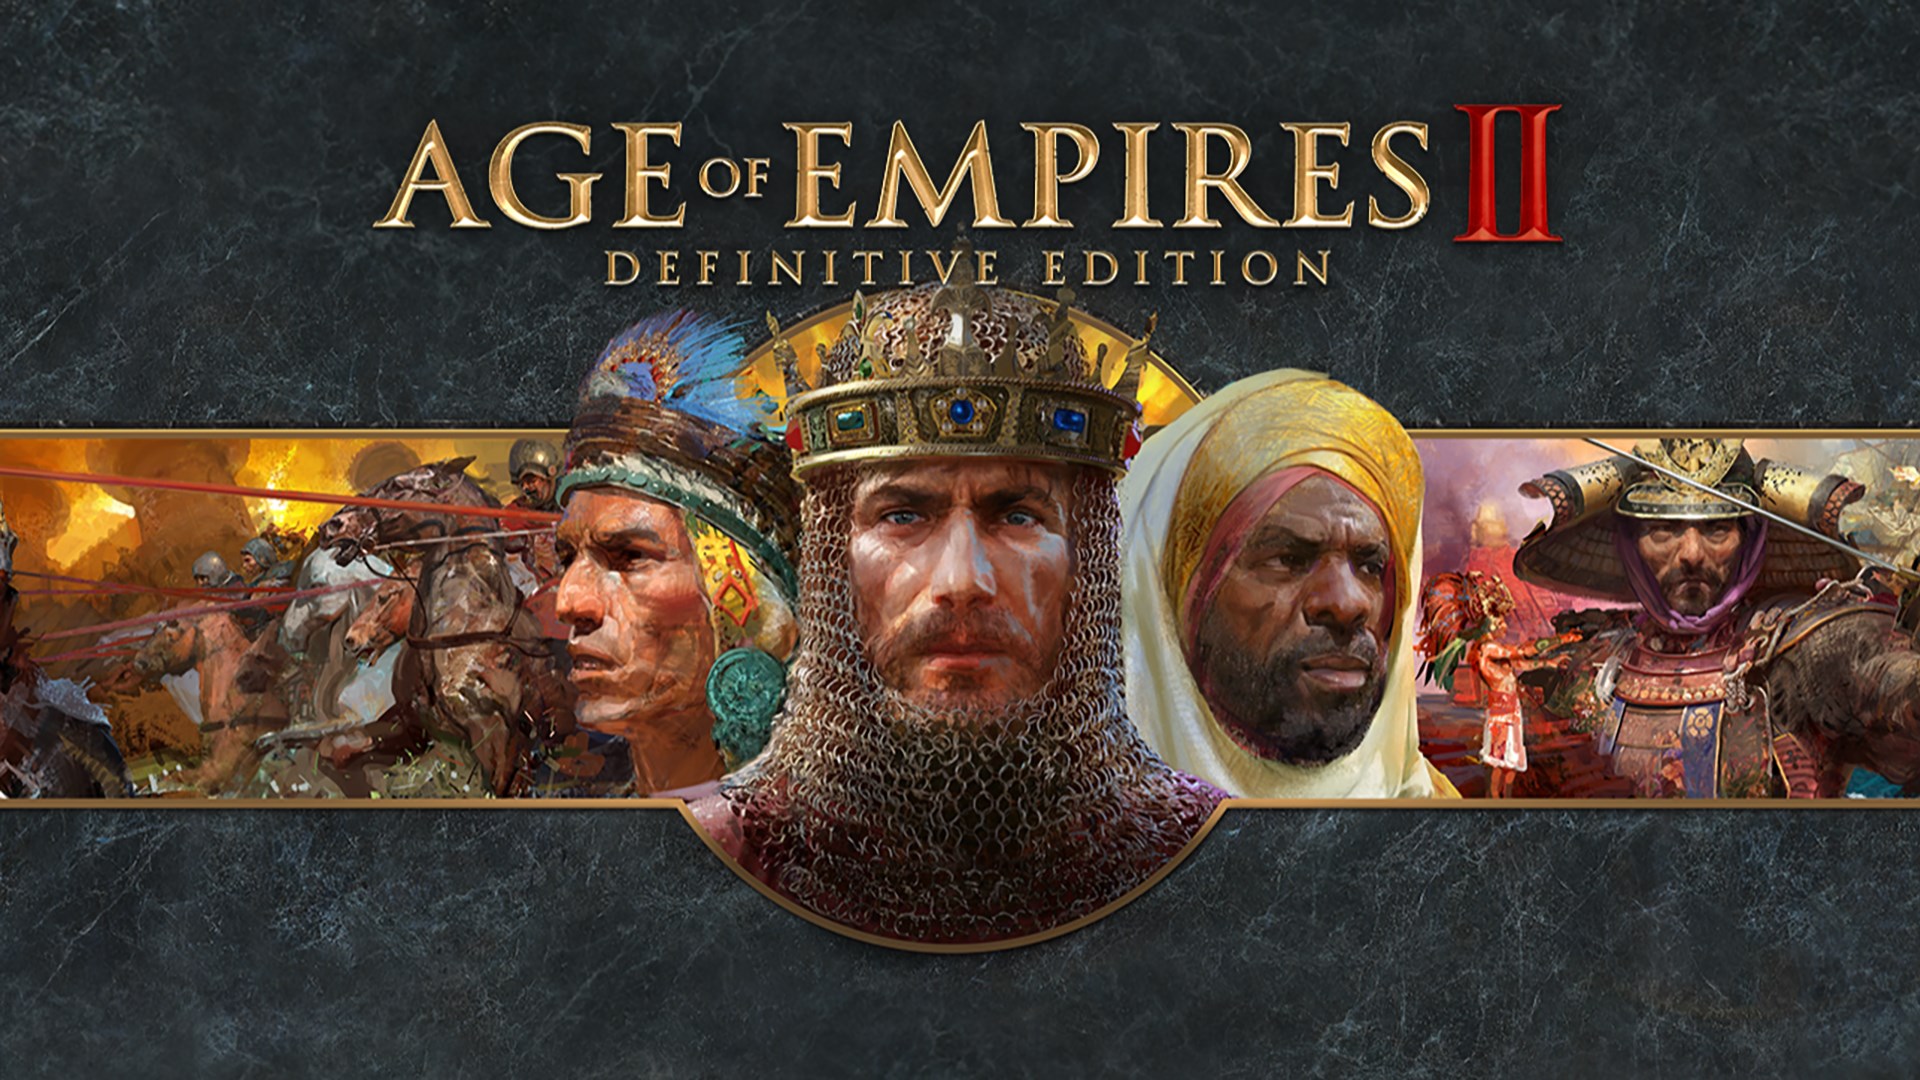 Bald im Xbox Game Pass: Hi-Fi Rush, GoldenEye 007, Age of Empires II: Definitive Edition und mehr